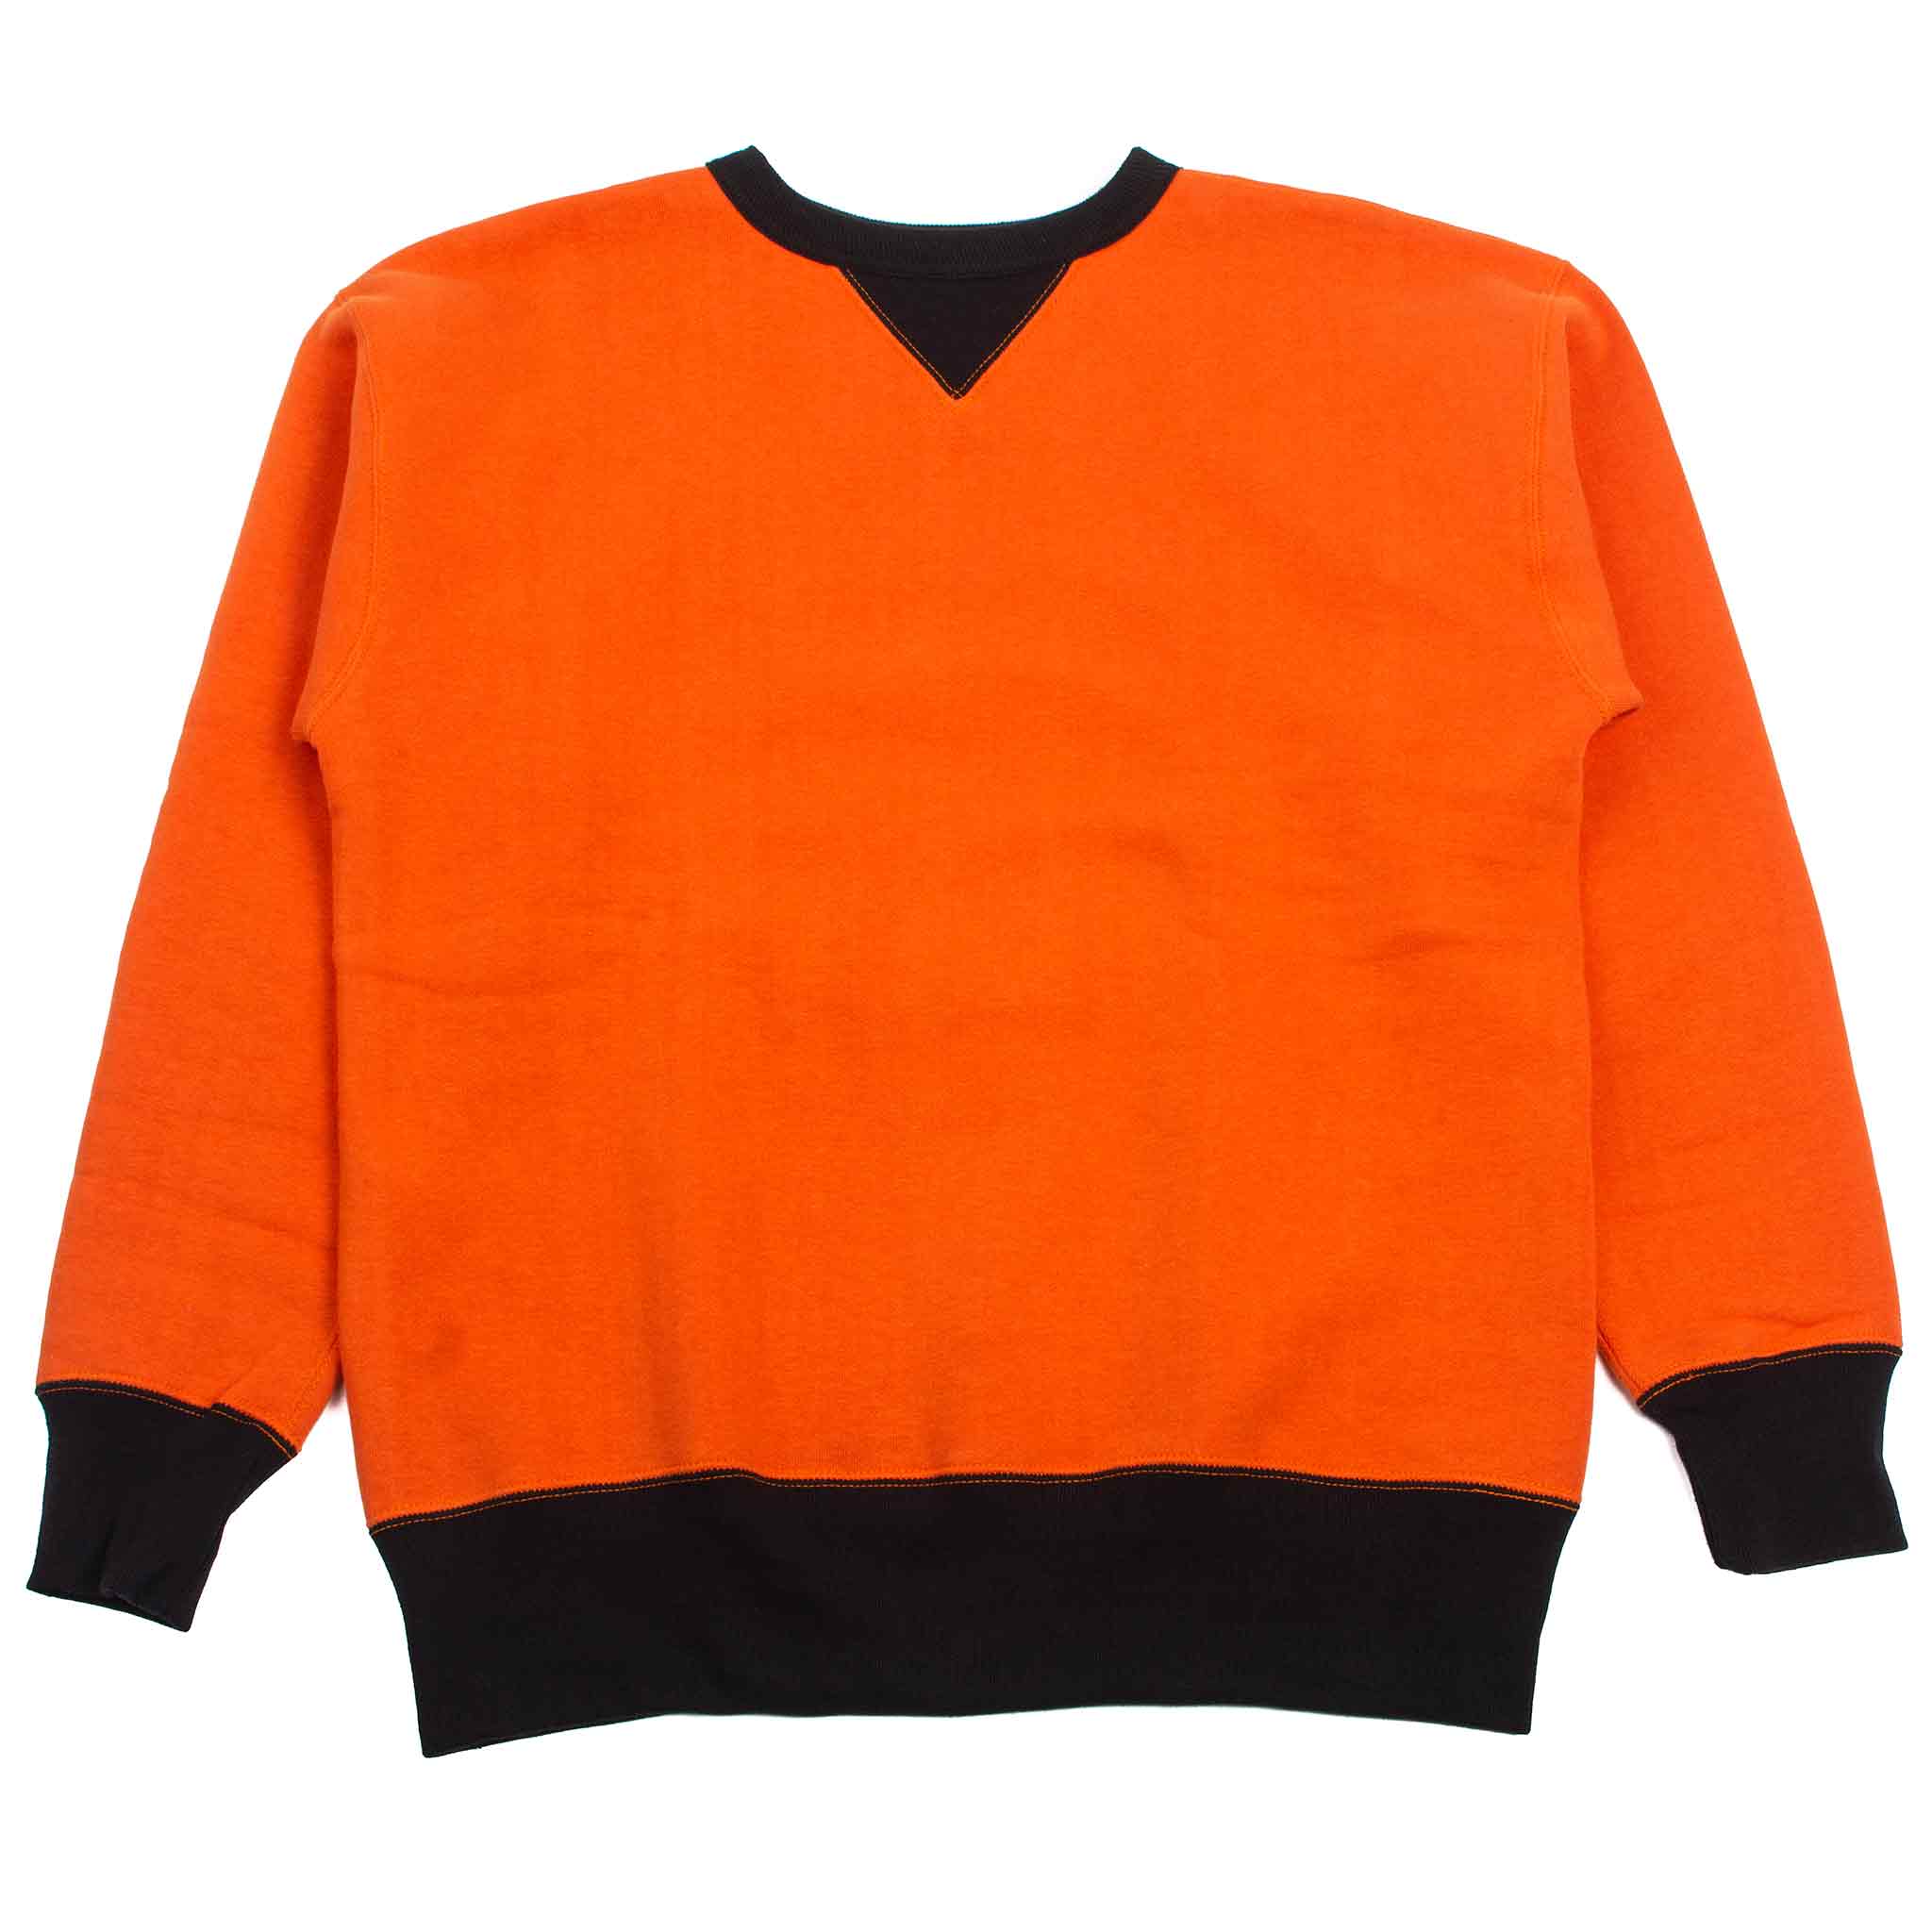 The Real McCoy's MC19112 Two-Tone Crewneck Sweatshirt Orange/Black